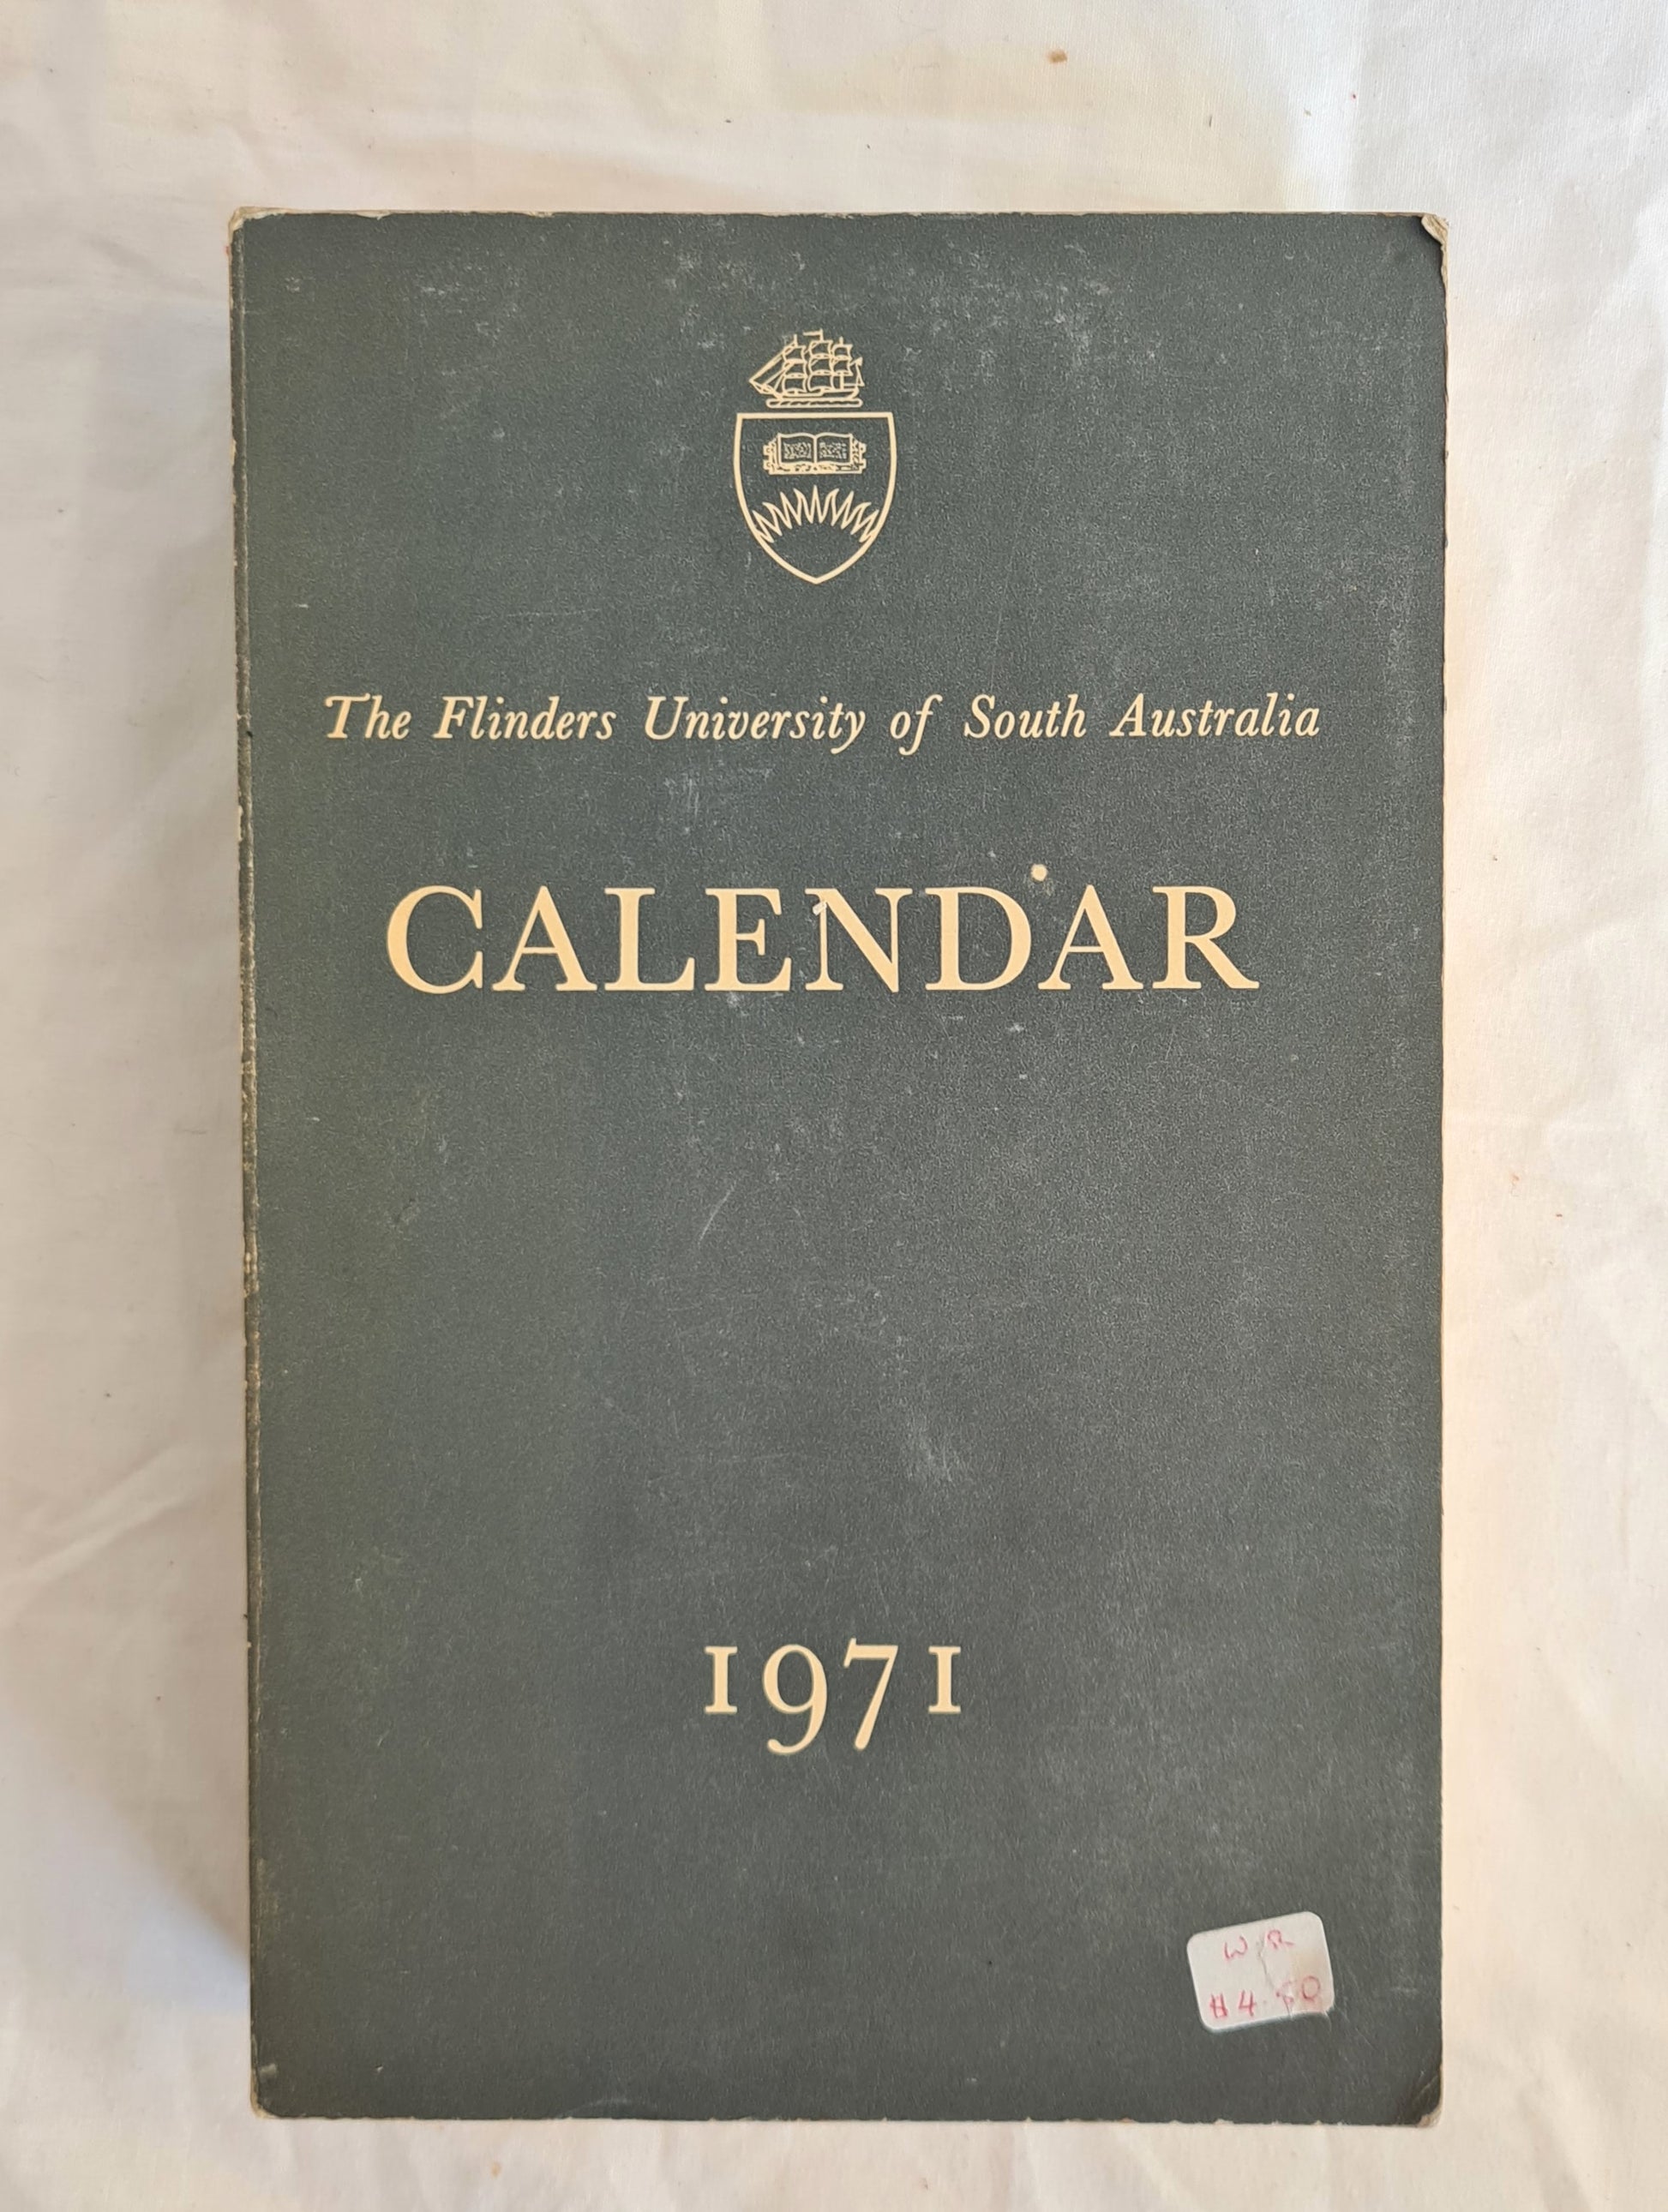 The Flinders University of South Australia Calendar 1971